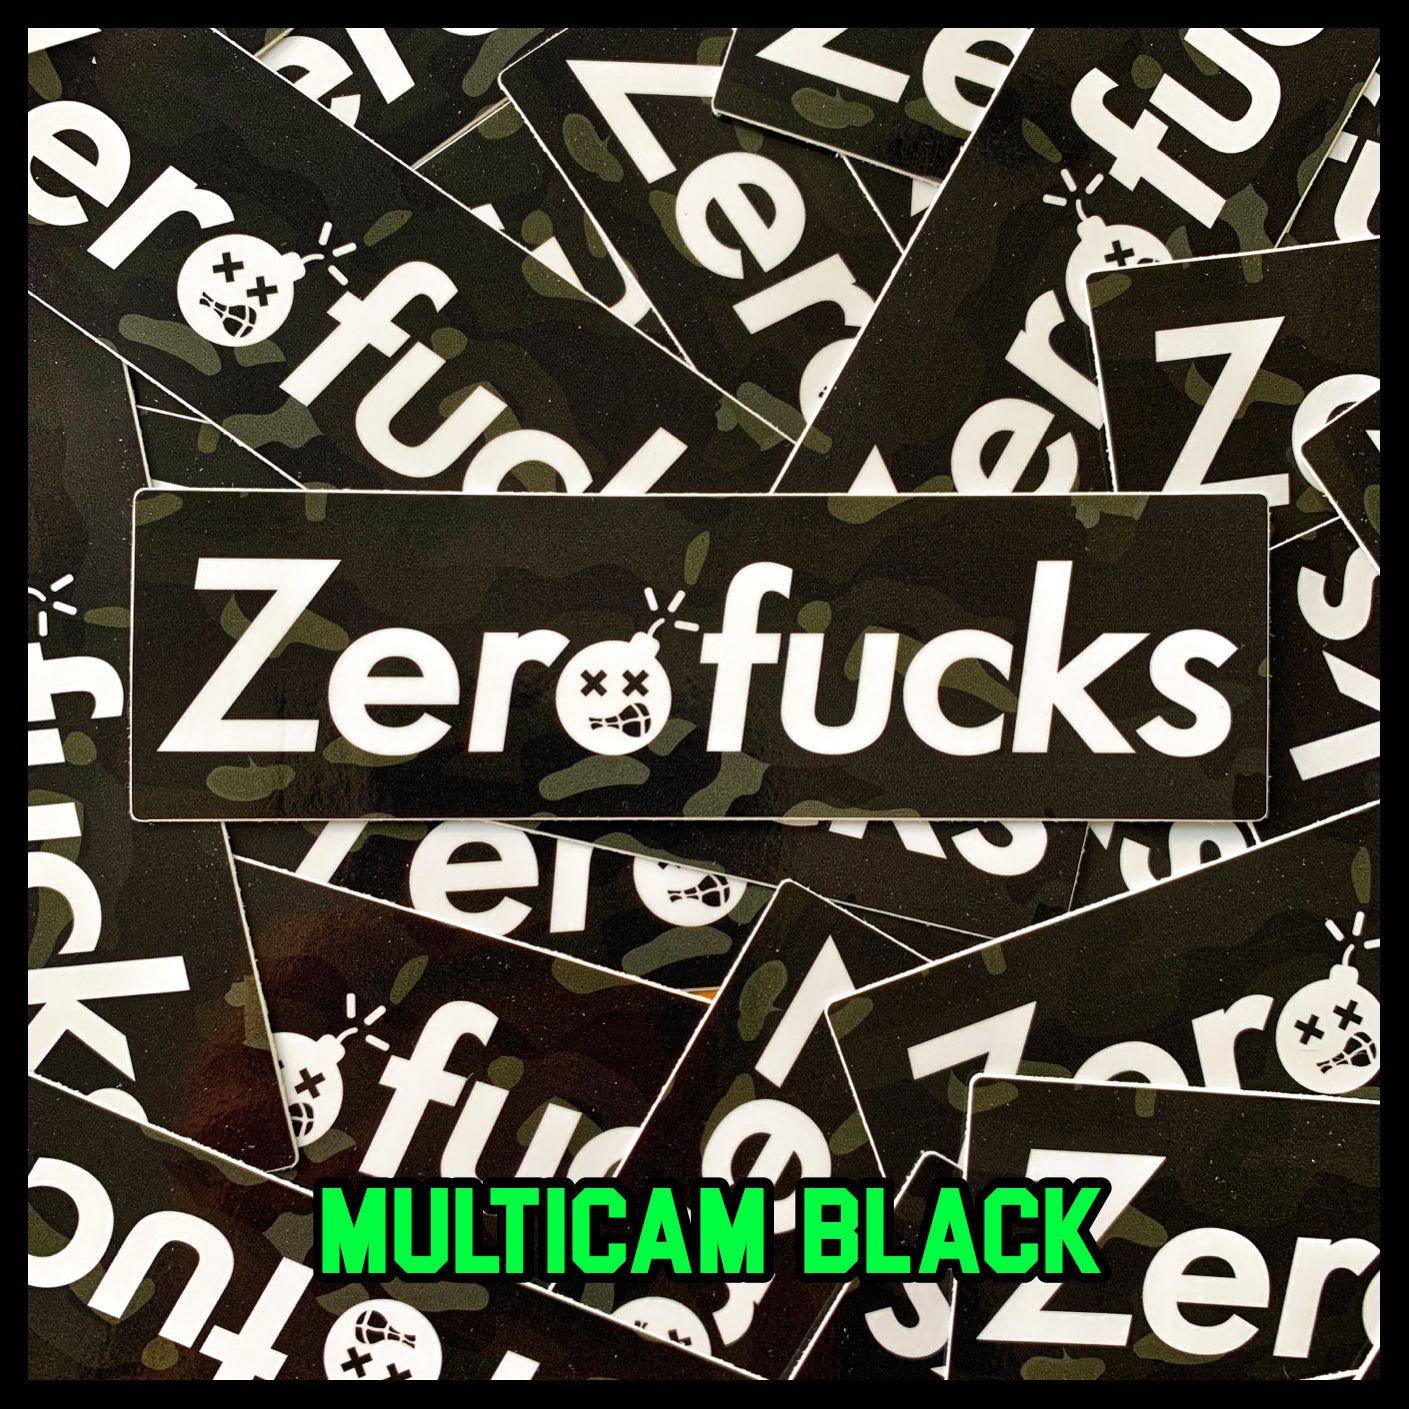 Dangerous Goods®️ Zero Fucks Box Logo 5” Stickers - Multicam Black